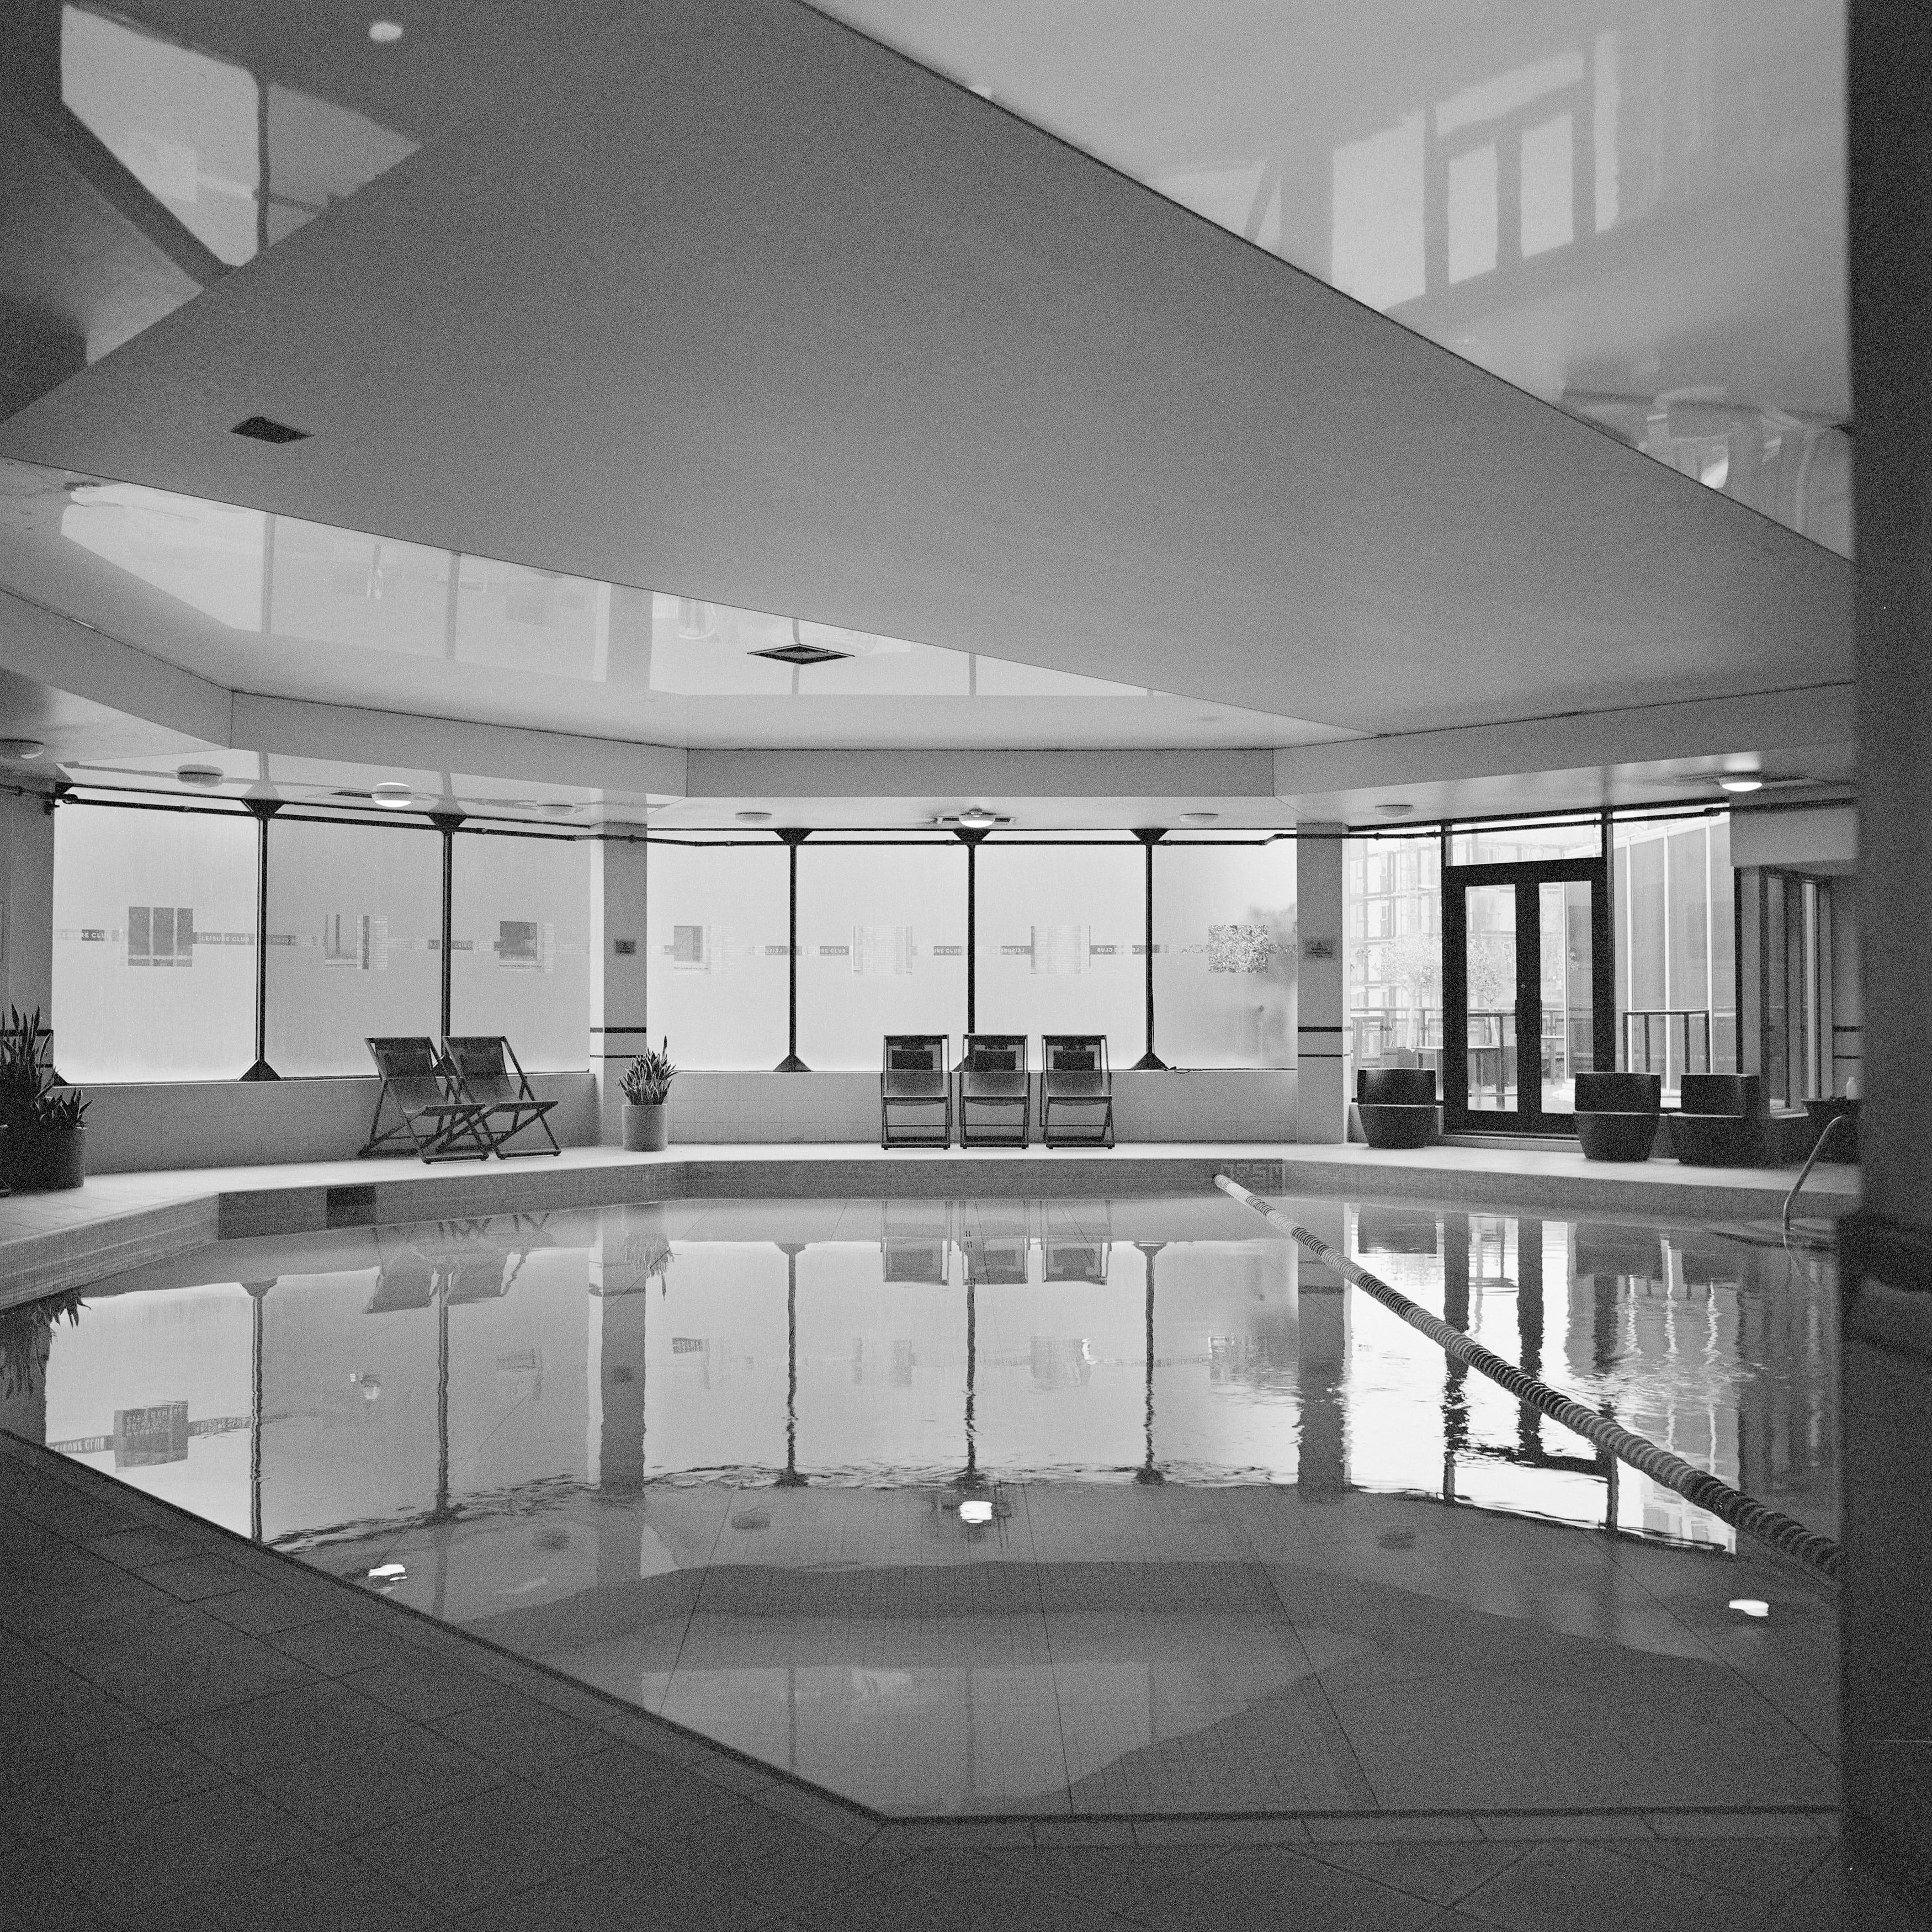 Anna Dobrovolskaya-Mints Black and White Photograph - Geometric Architectural Photo: Black & White Square Pool Captured on Film